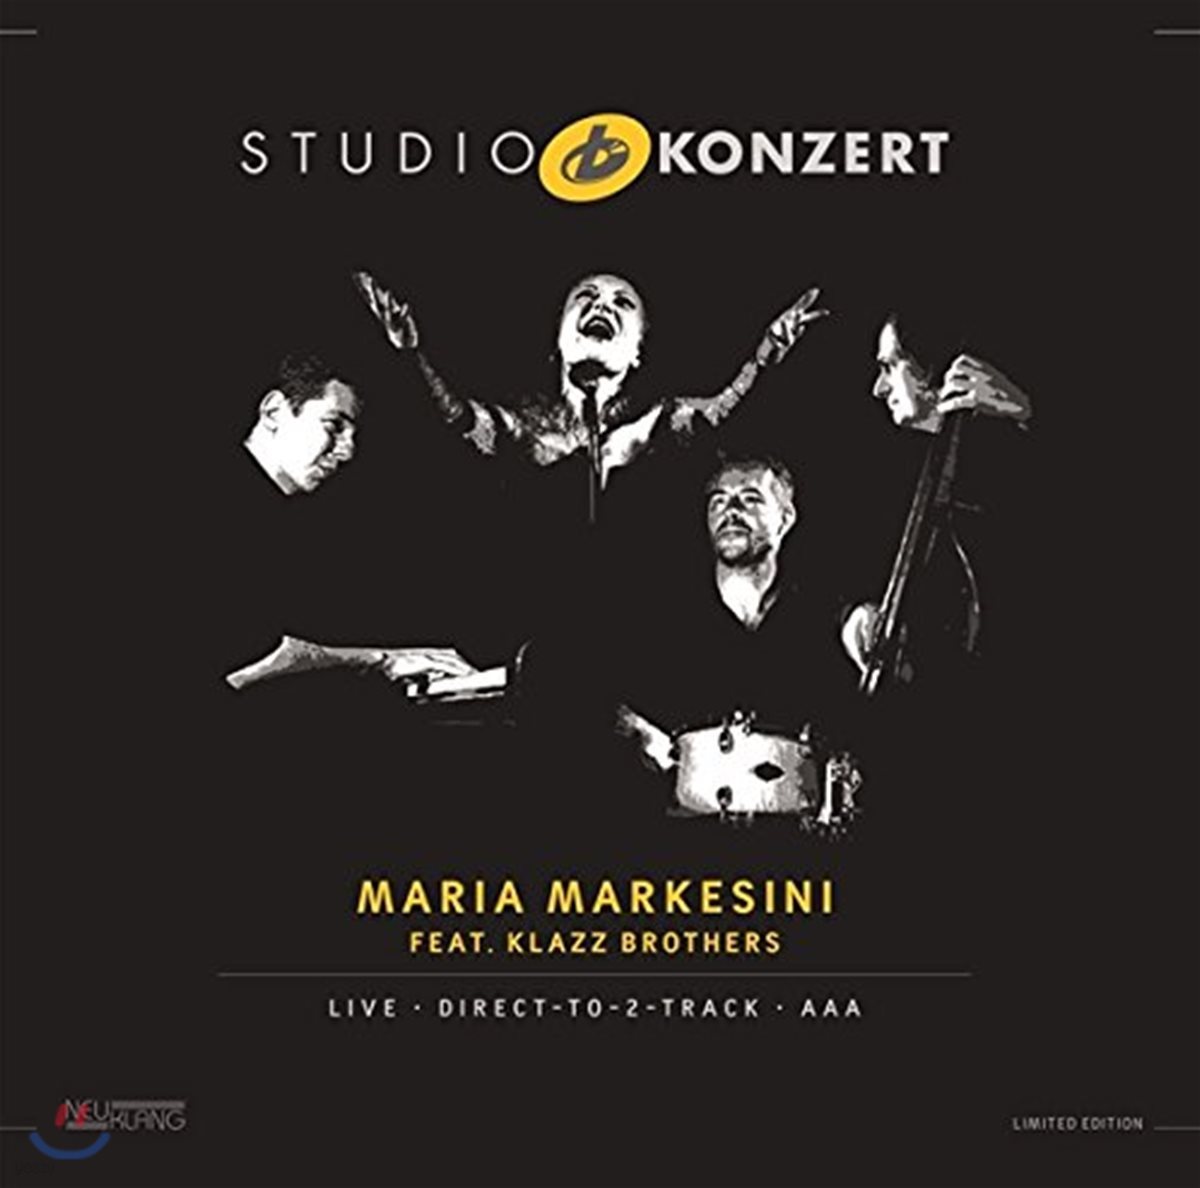 Maria Markesini & Klazz Brothers - Studio Konzert 마리아 마르케시니 & 클라츠 브라더스 스튜디오 콘서트 [Limited Edition LP]